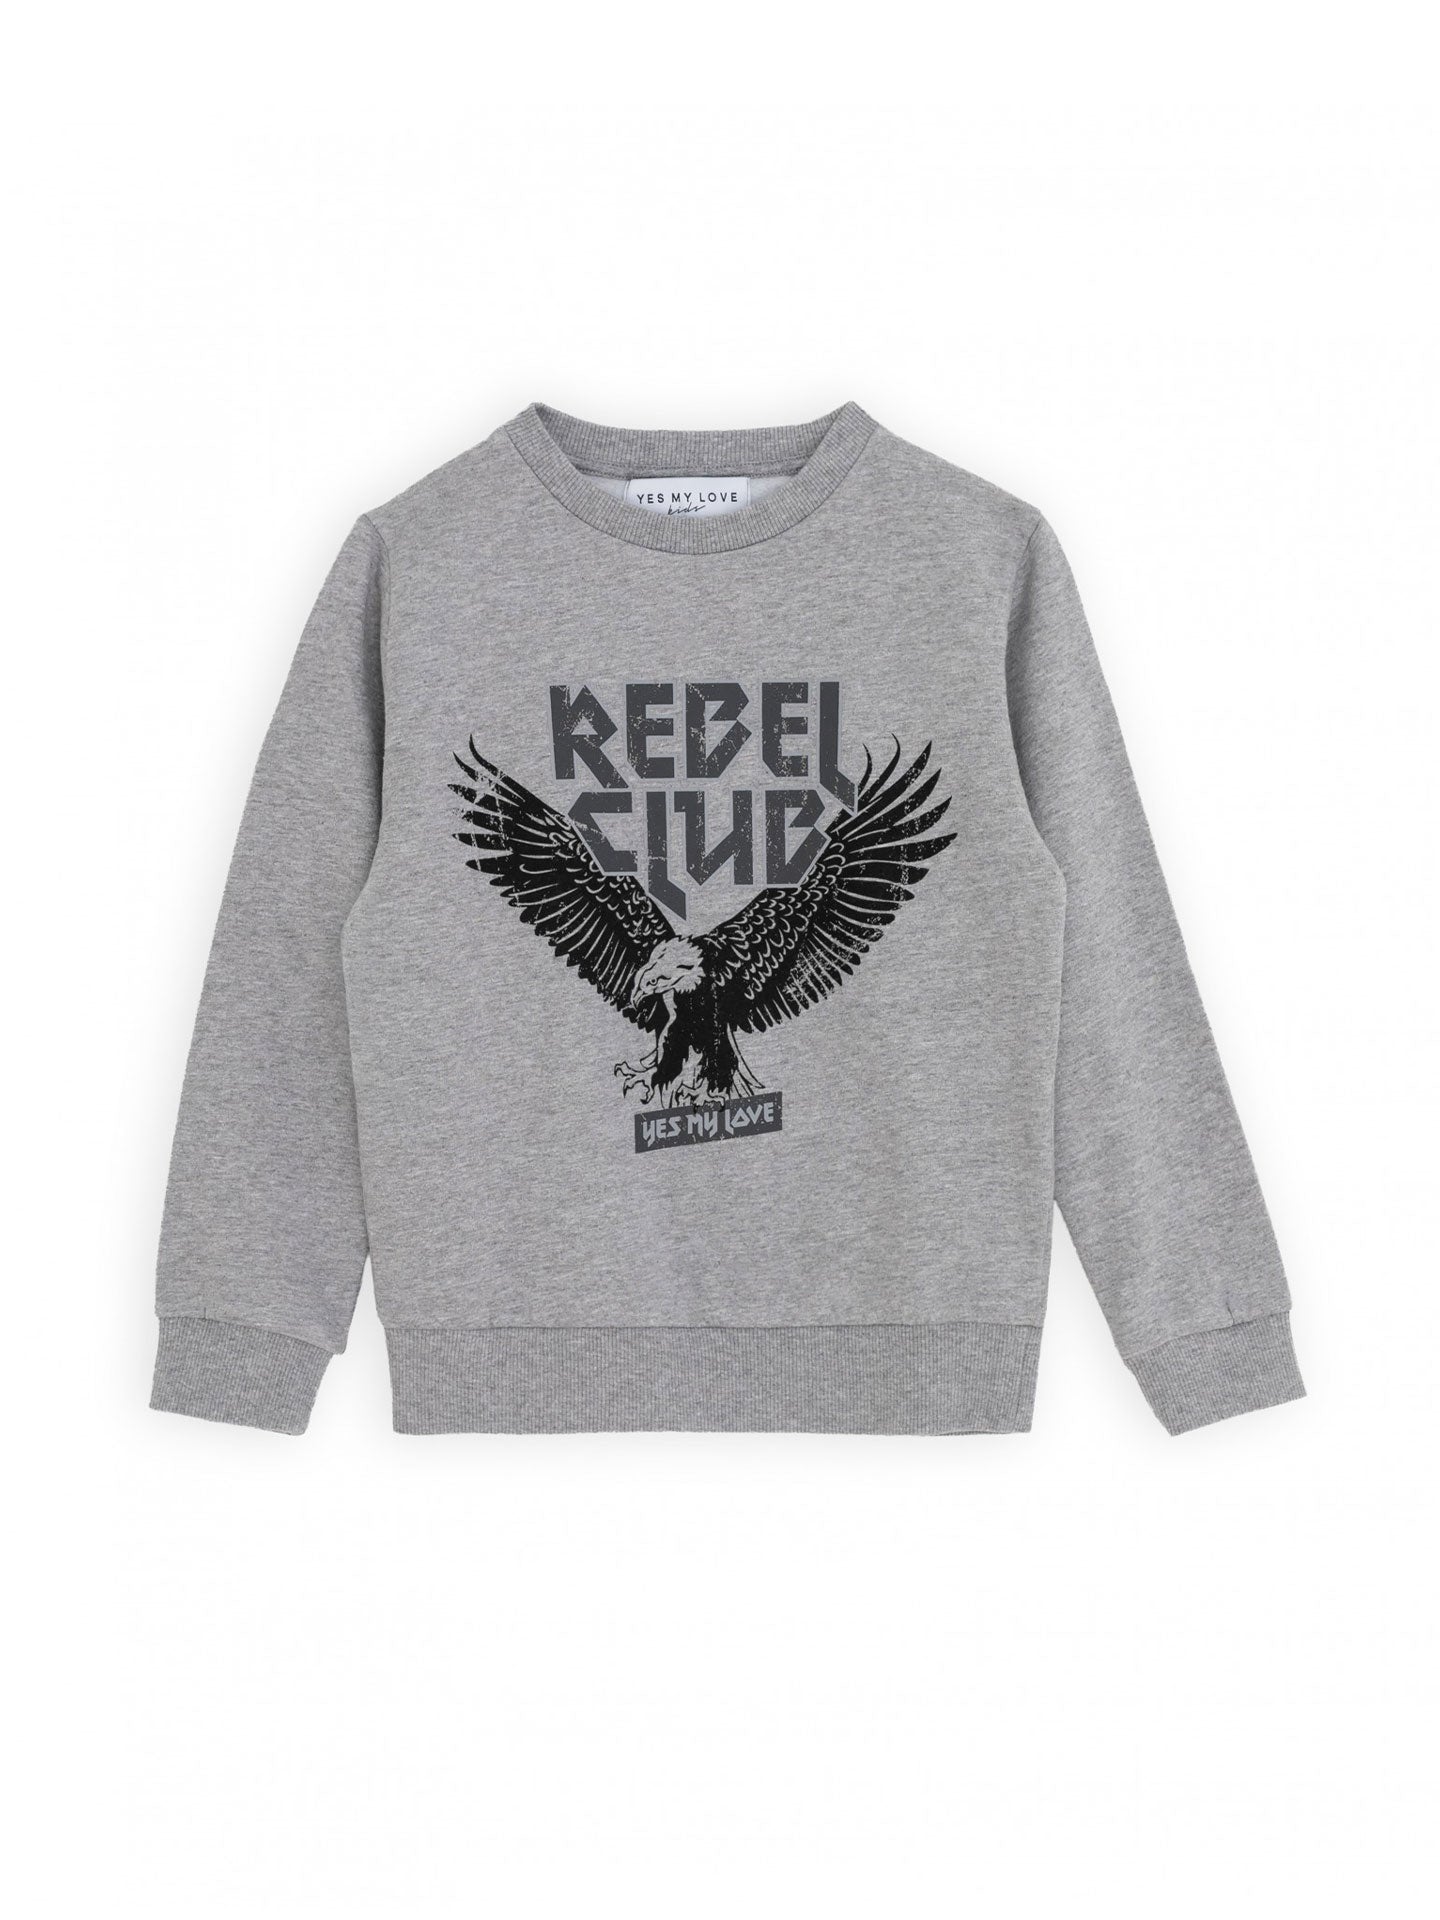 Rebel Club Sweater Kids - grau